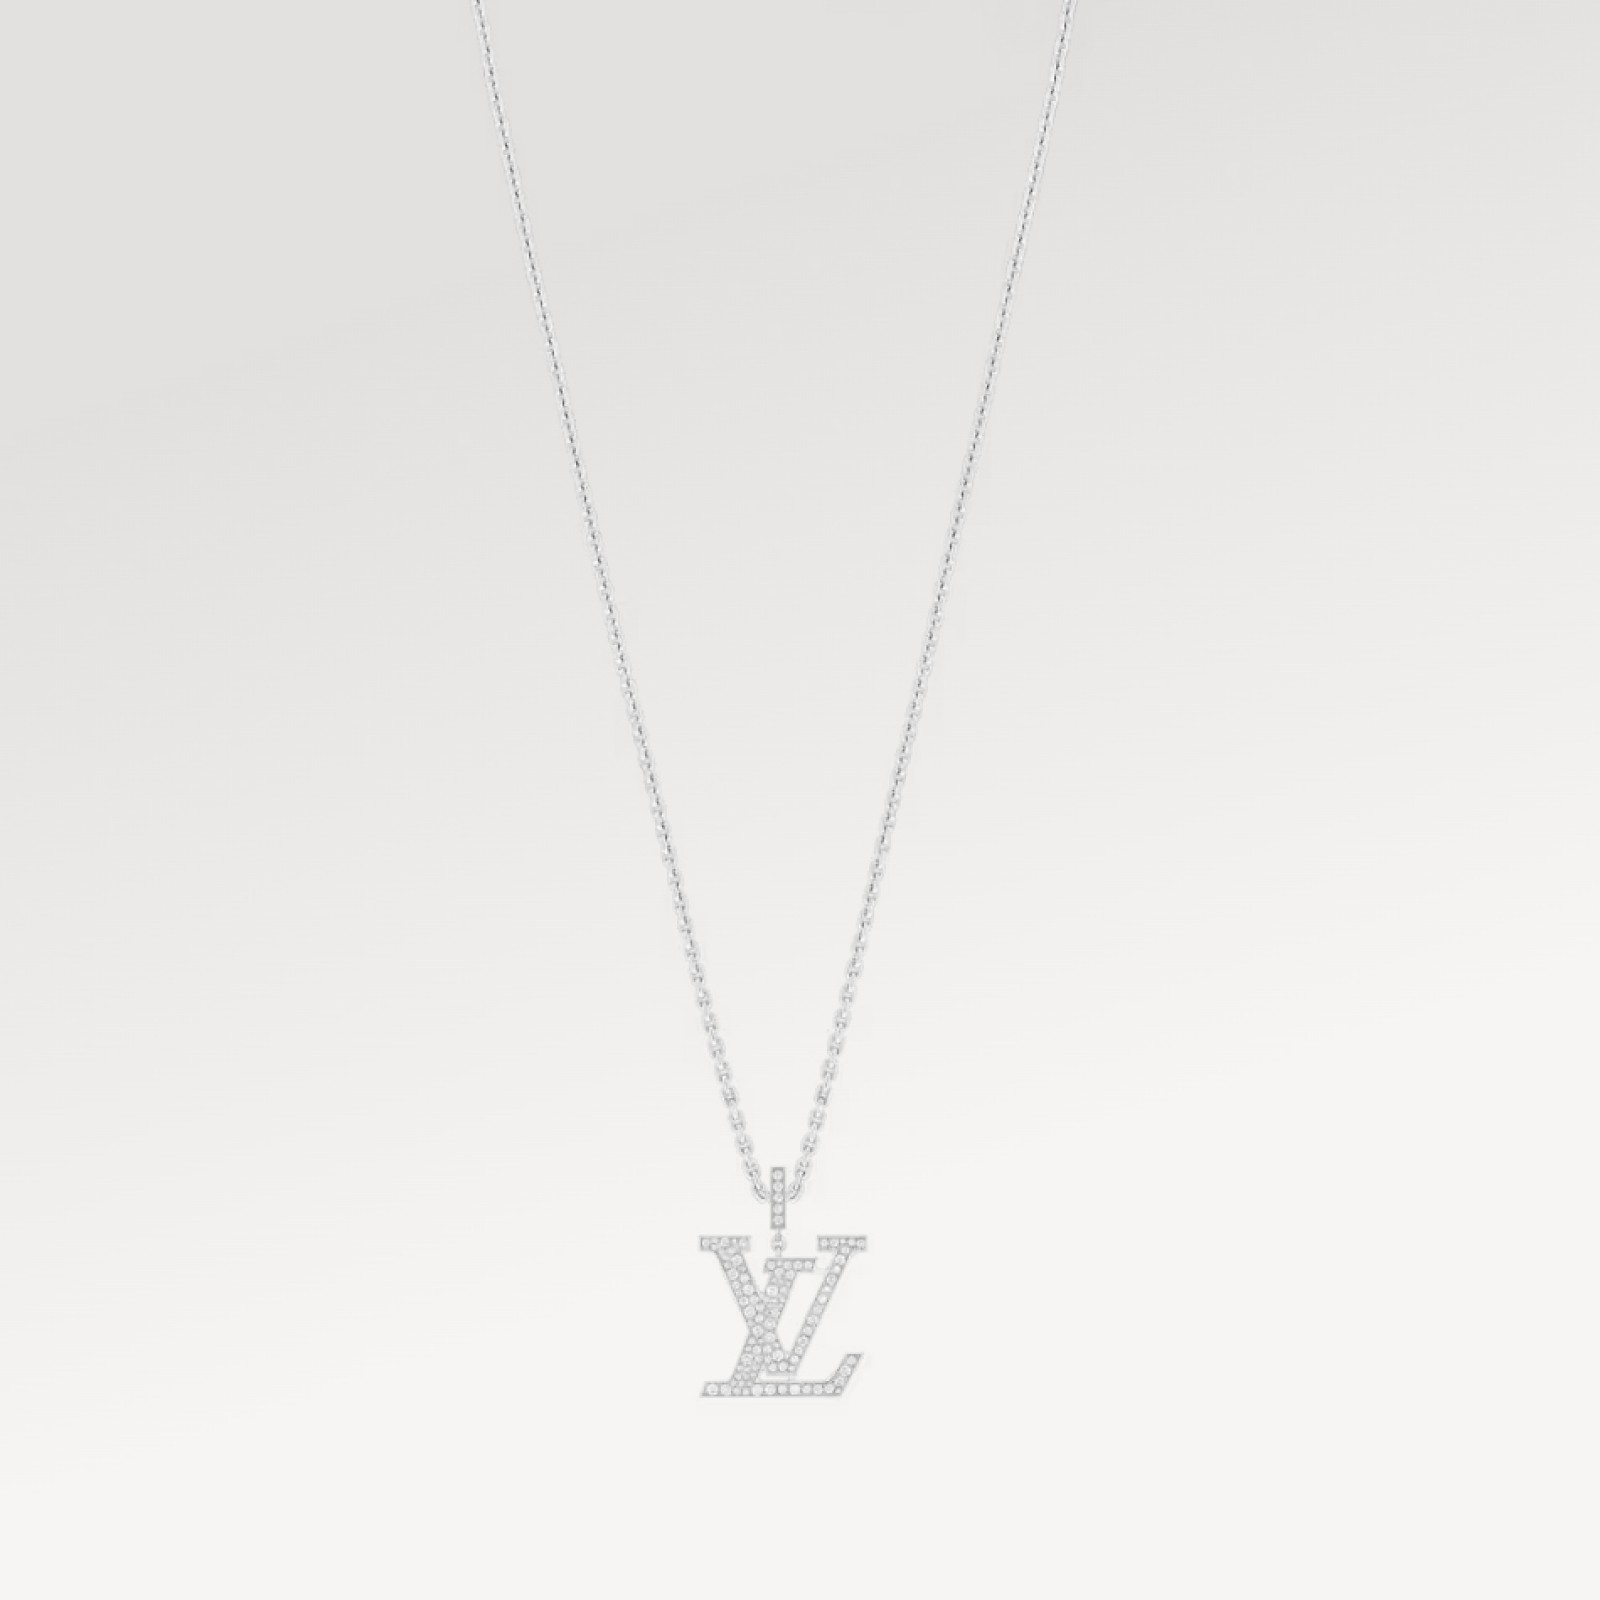 LV Large Pendant, White Gold And Diamonds Q93821